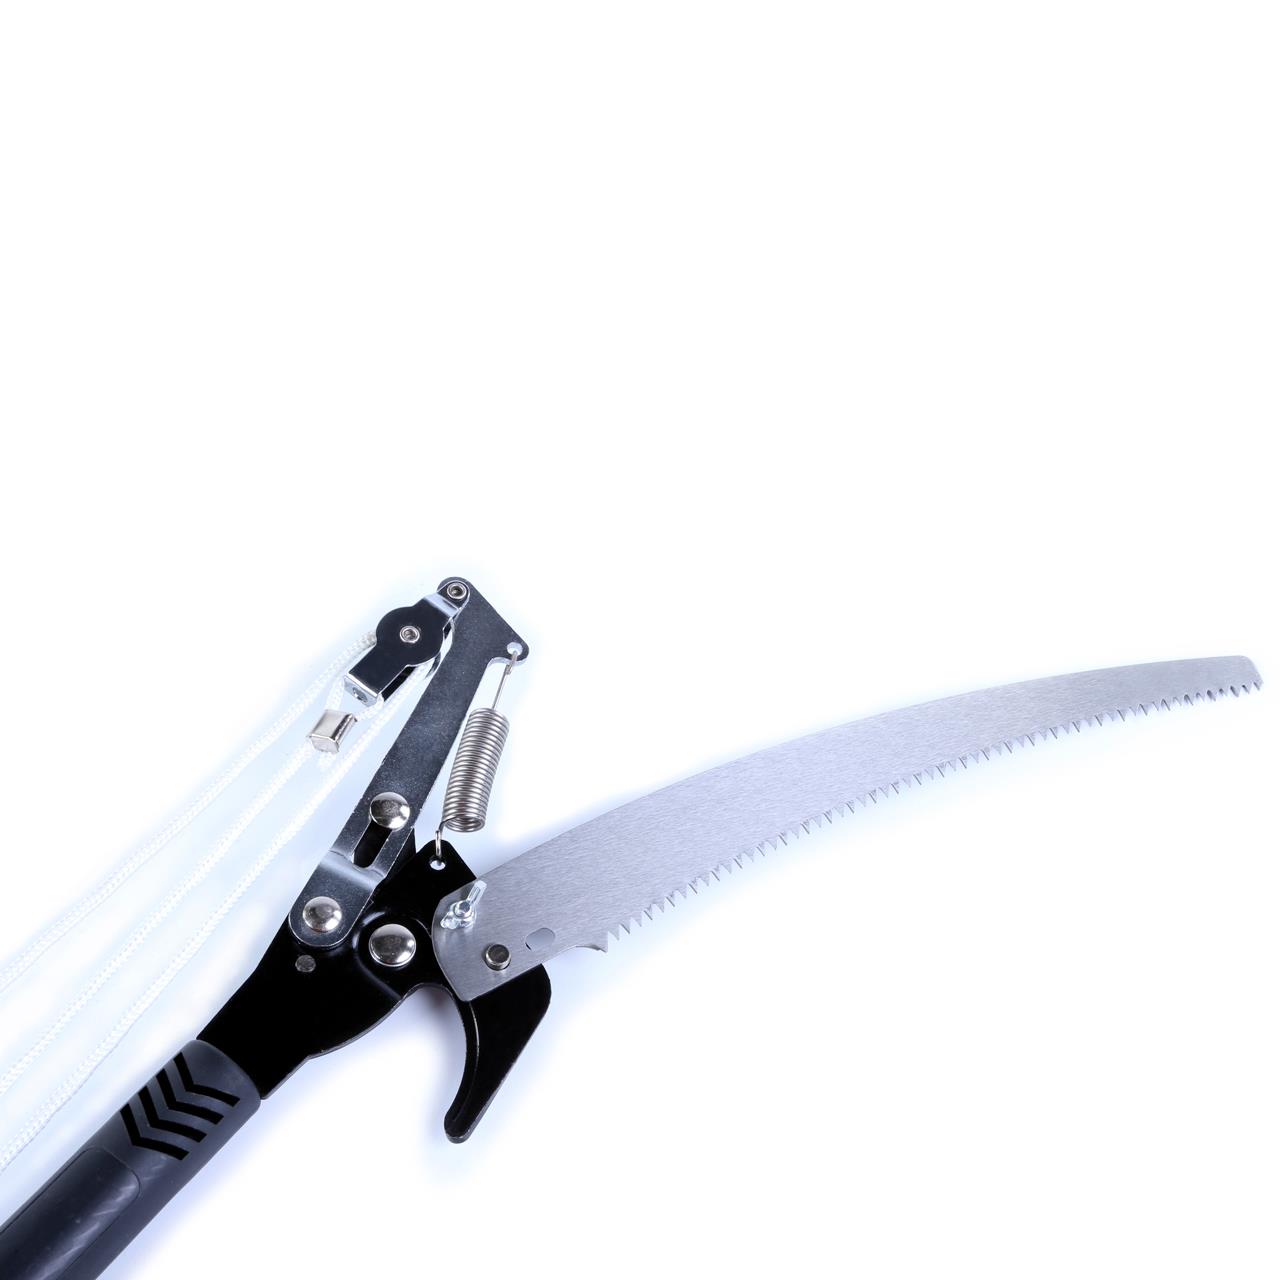 FUXTEC telescopic pruning shears with a saw-cut blade (35cm) FX-TAS35